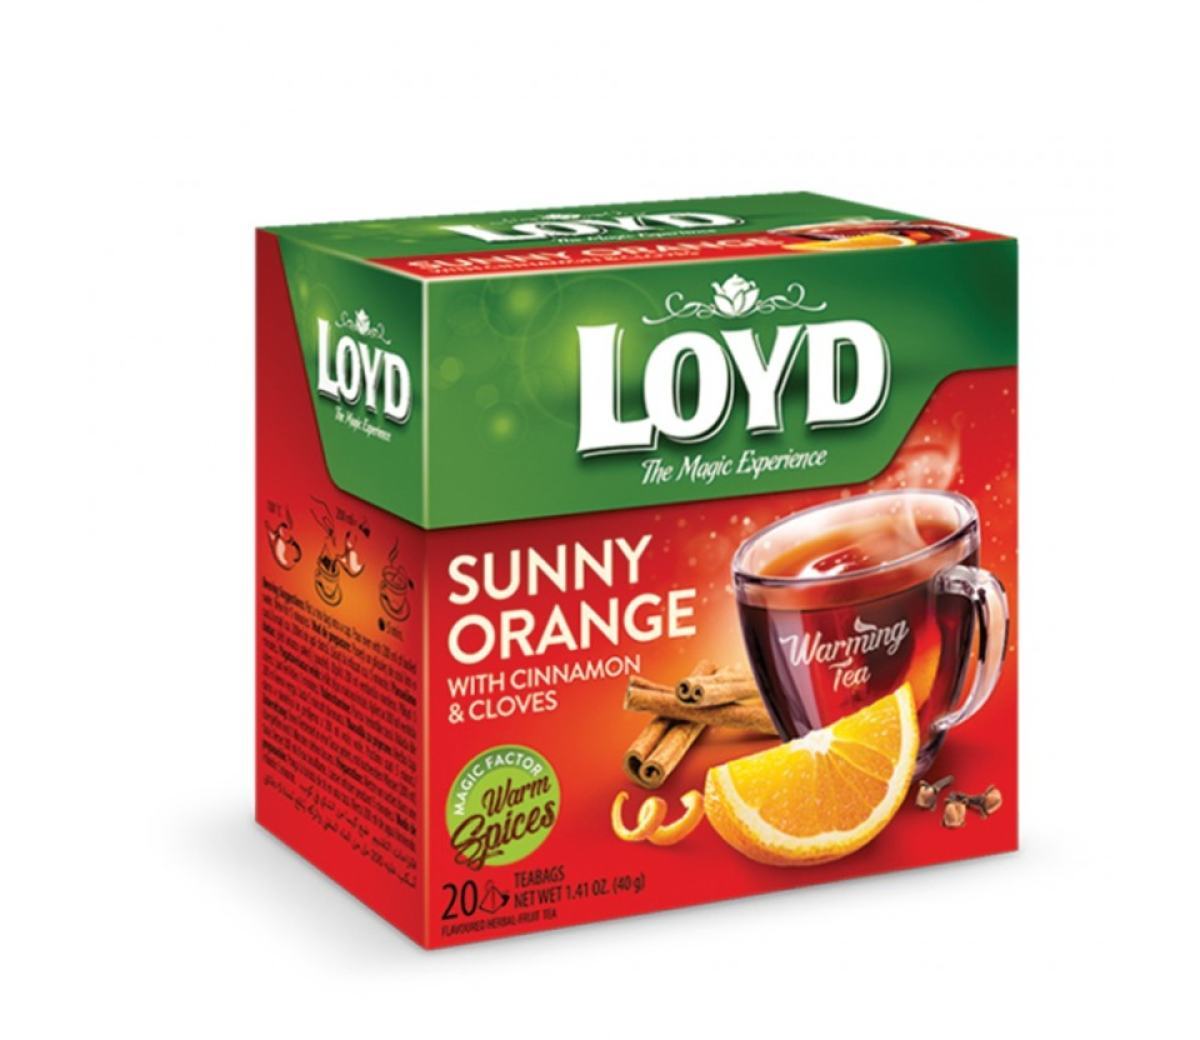 Trà túi lọc Loyd Sunny Orange hộp 40gr